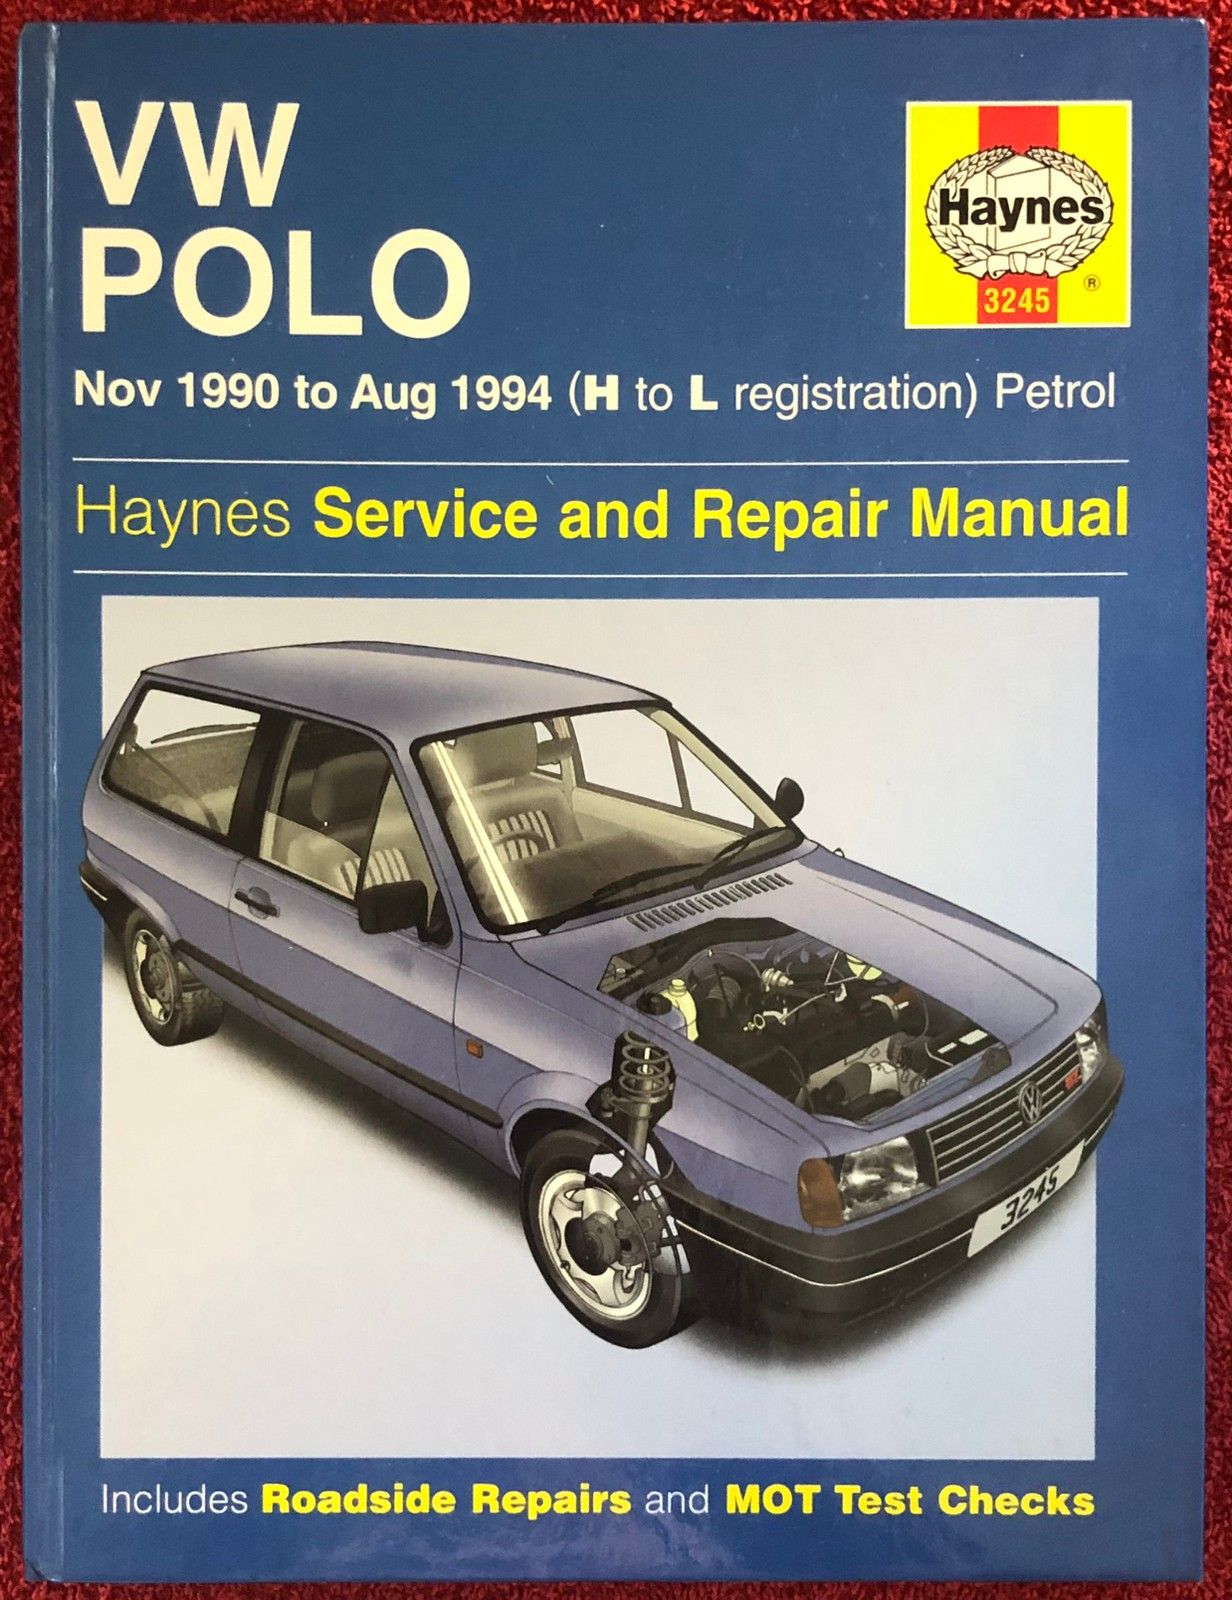 Haynes - VW Polo, Nov 1990 to Aug 1994, Petrol, Service and Repair ...